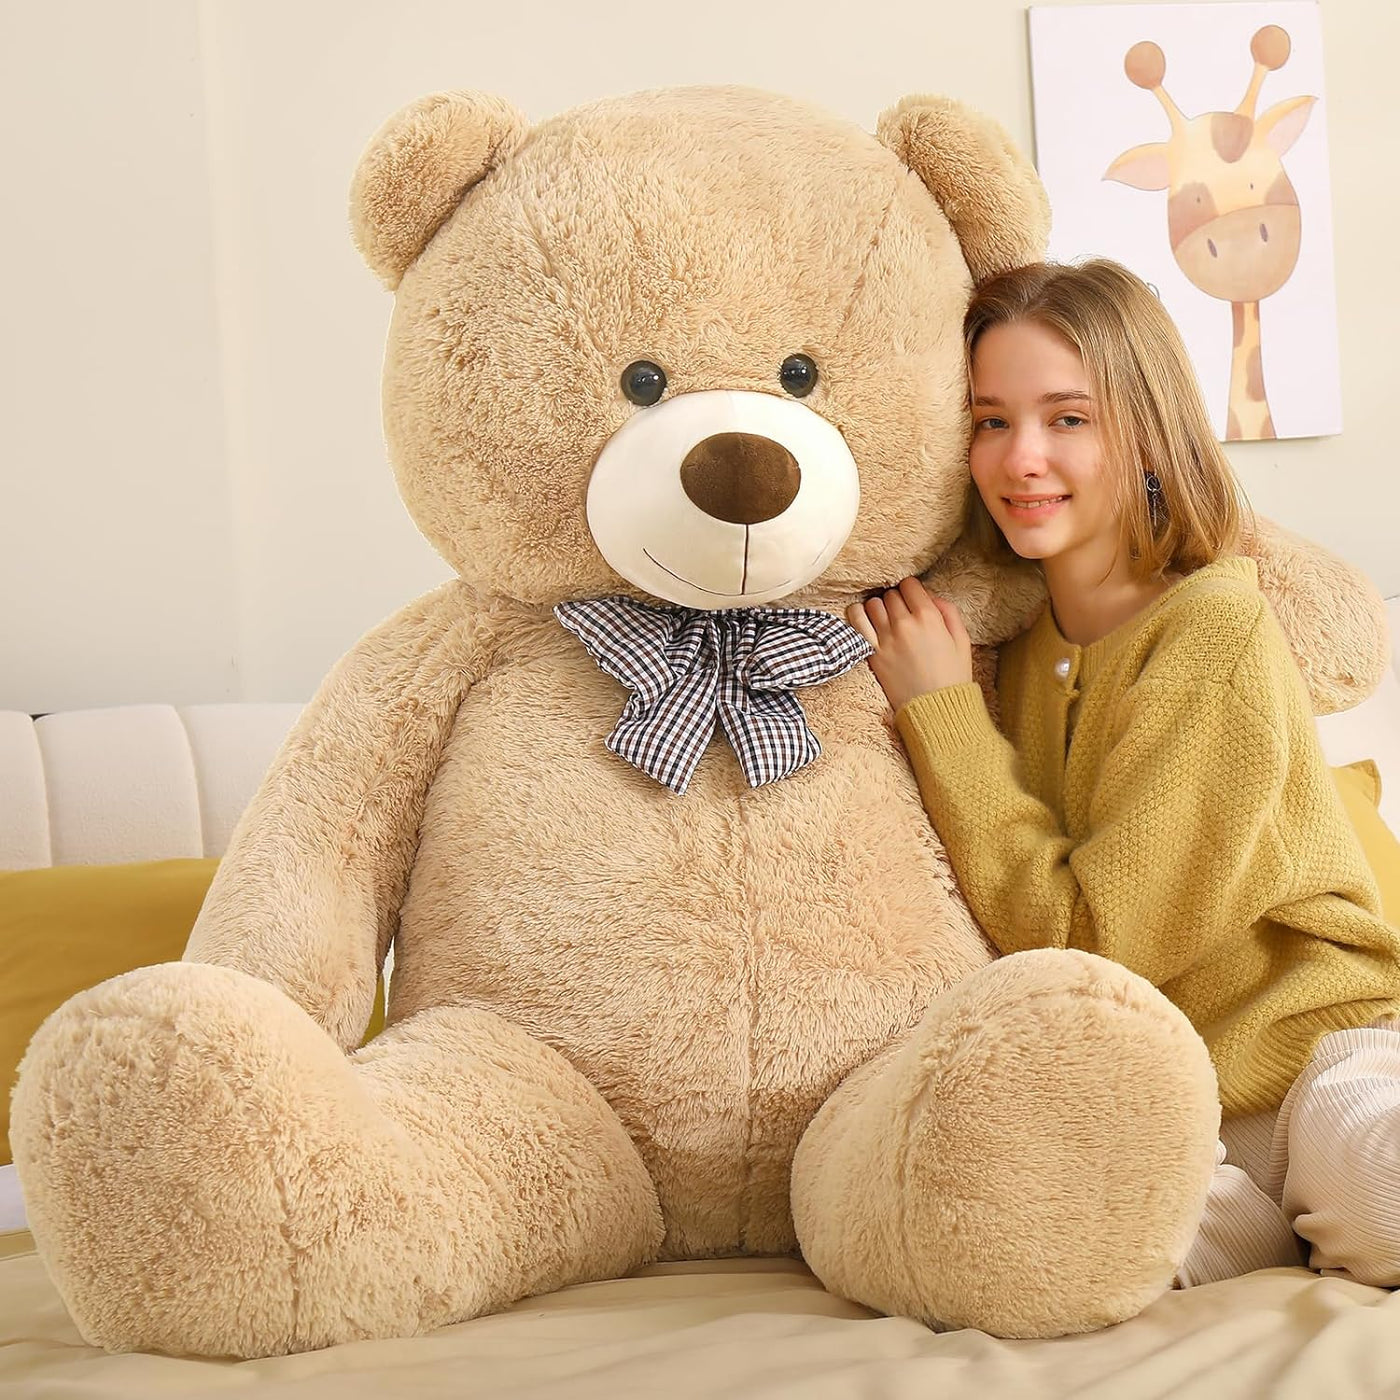 Giant Teddy Bear Stuffed Toy, Light Brown, 59 Inches - MorisMos Plush Toys